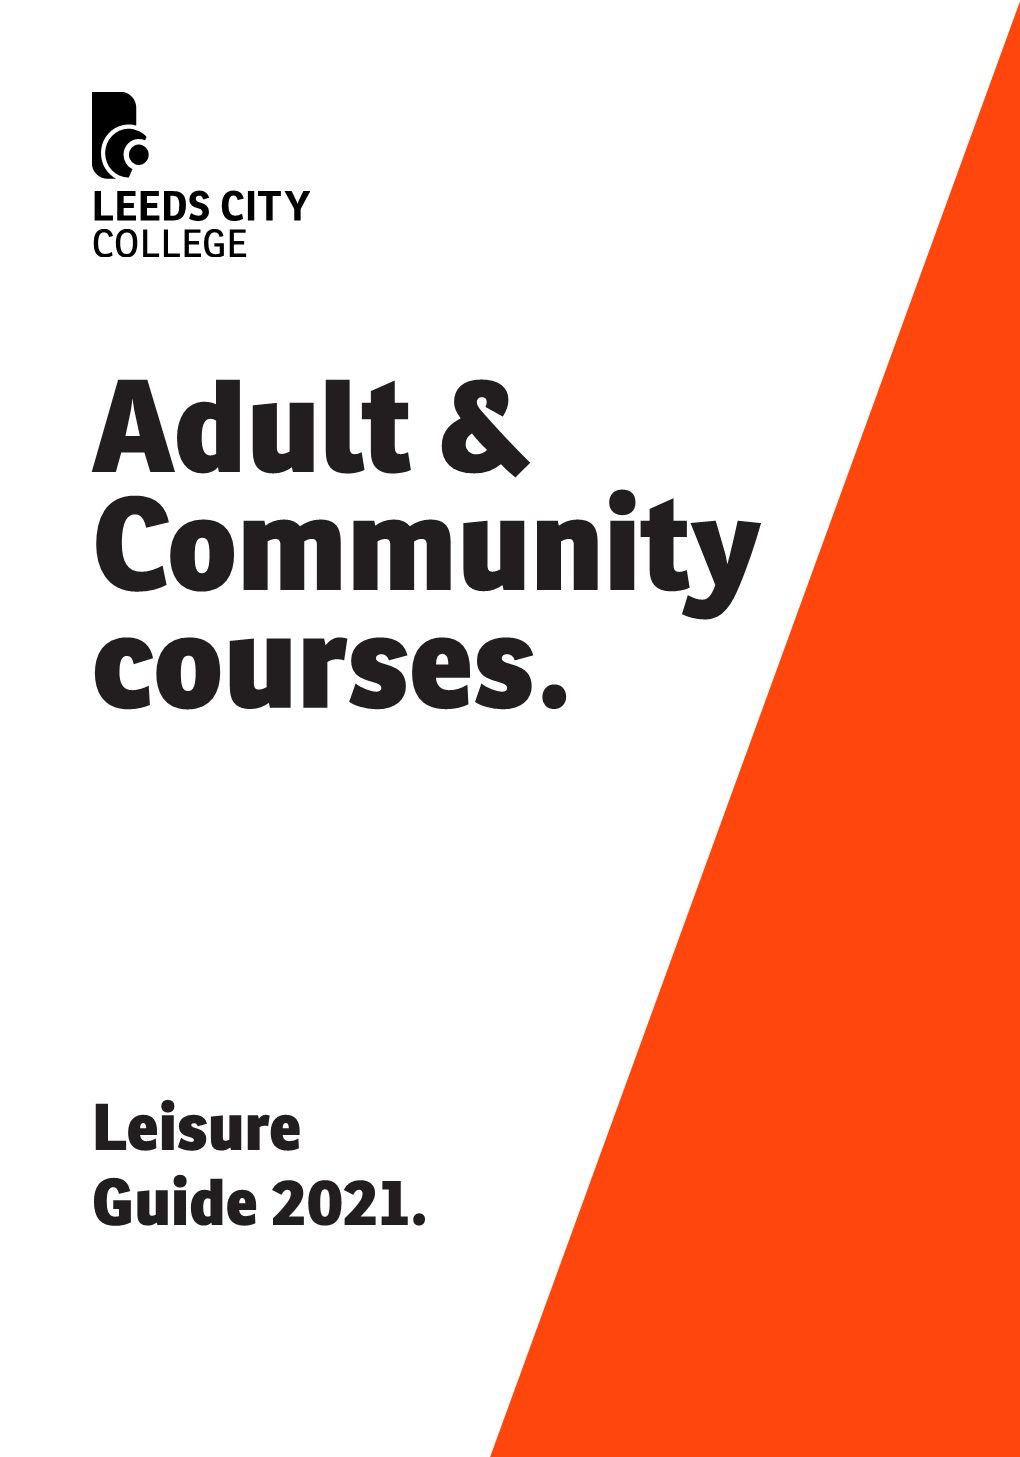 Adult & Community Courses